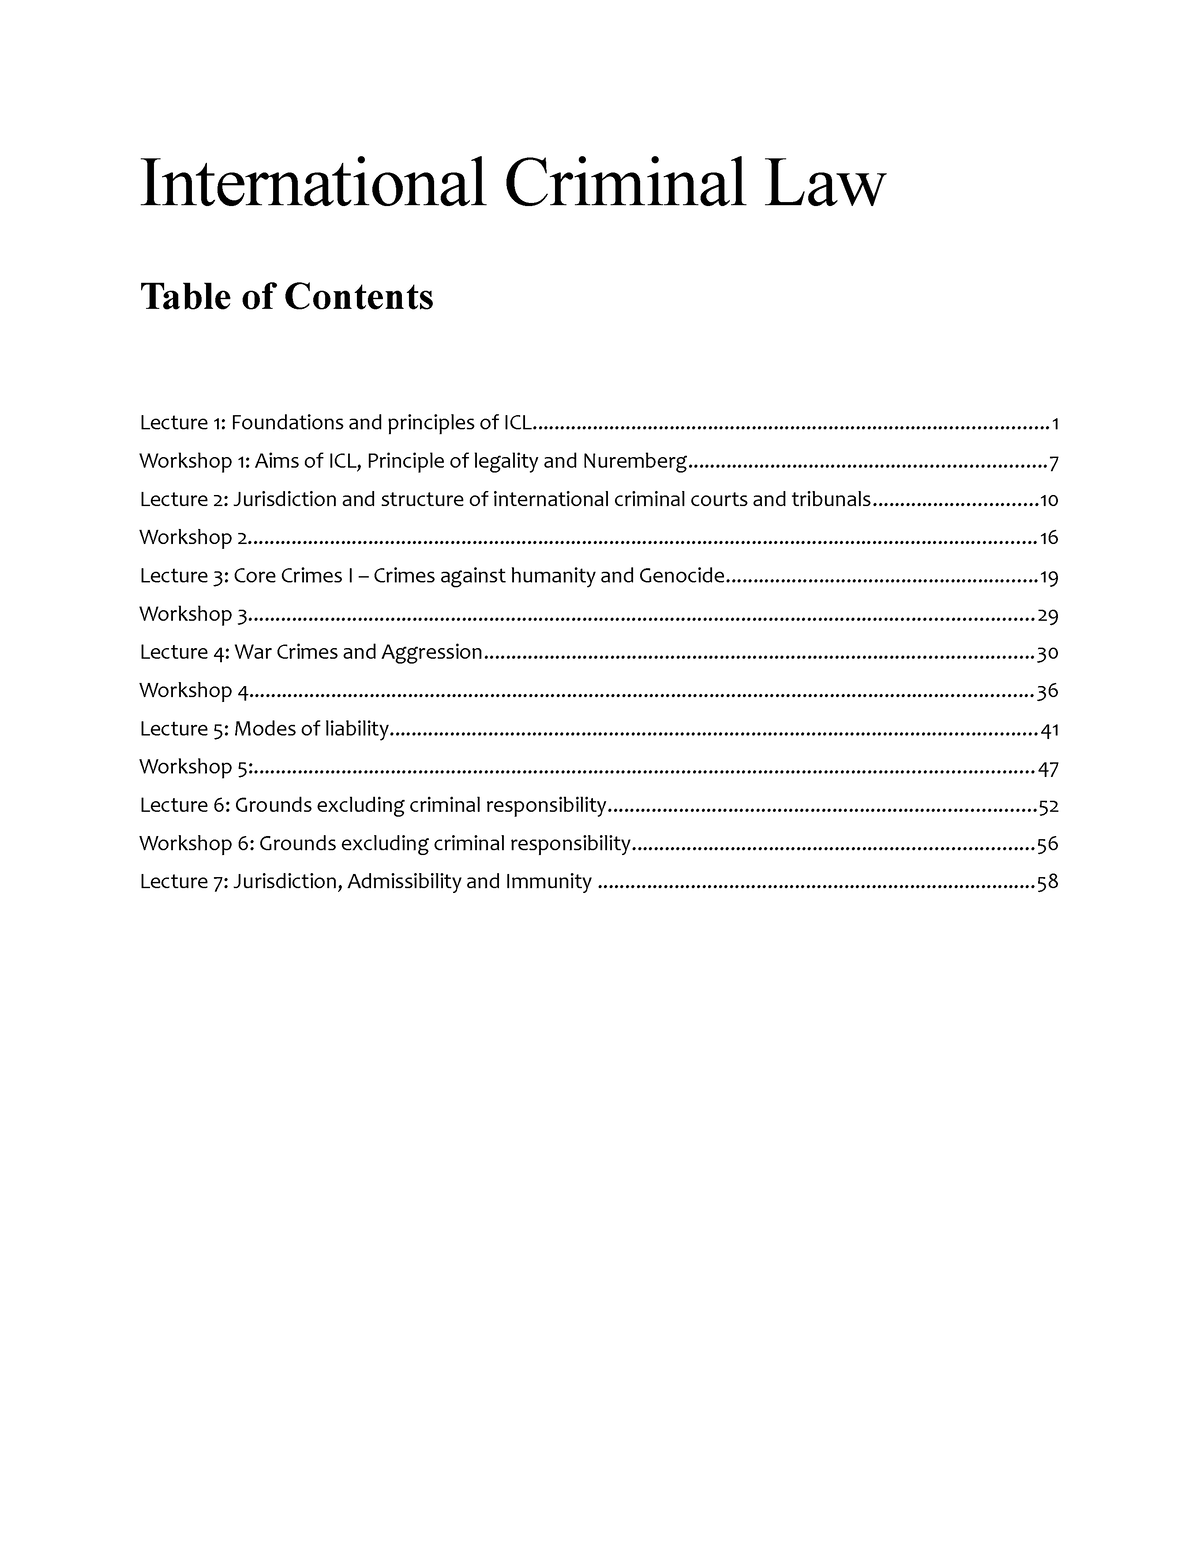 international criminal law research paper